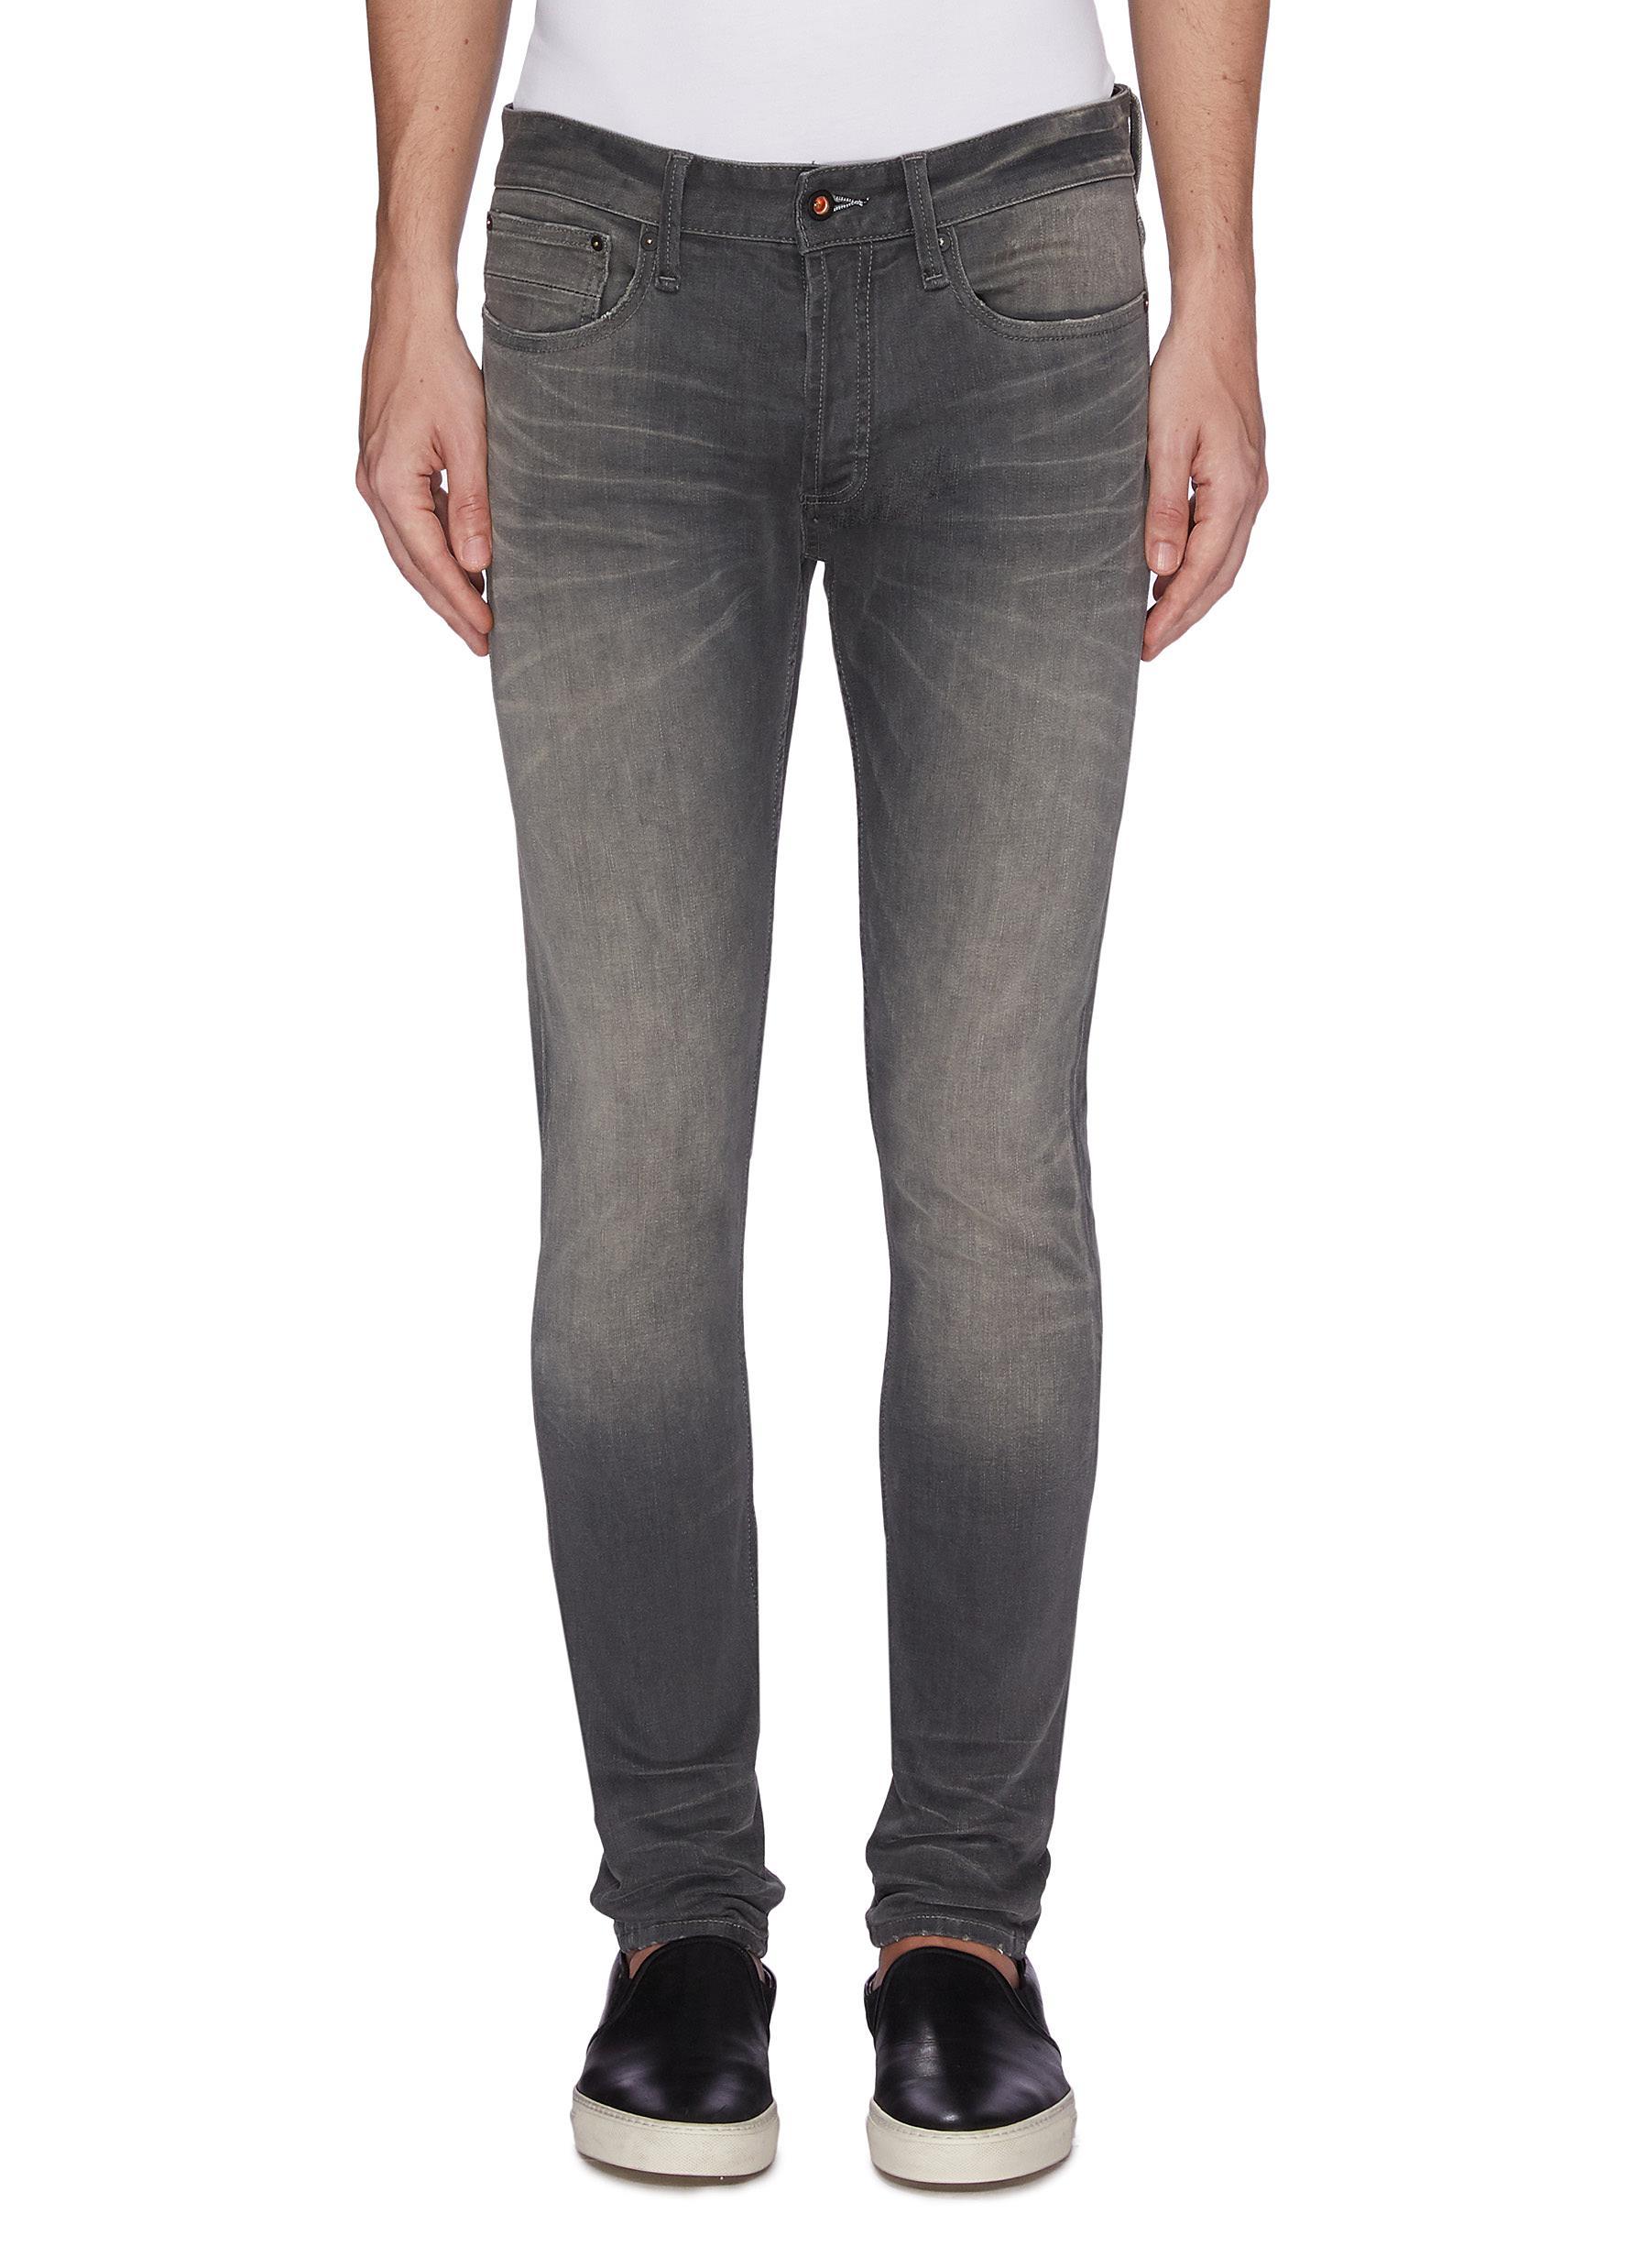 Denham Denim 'bolt' Washed Skinny Jeans in Grey (Gray) for Men - Lyst